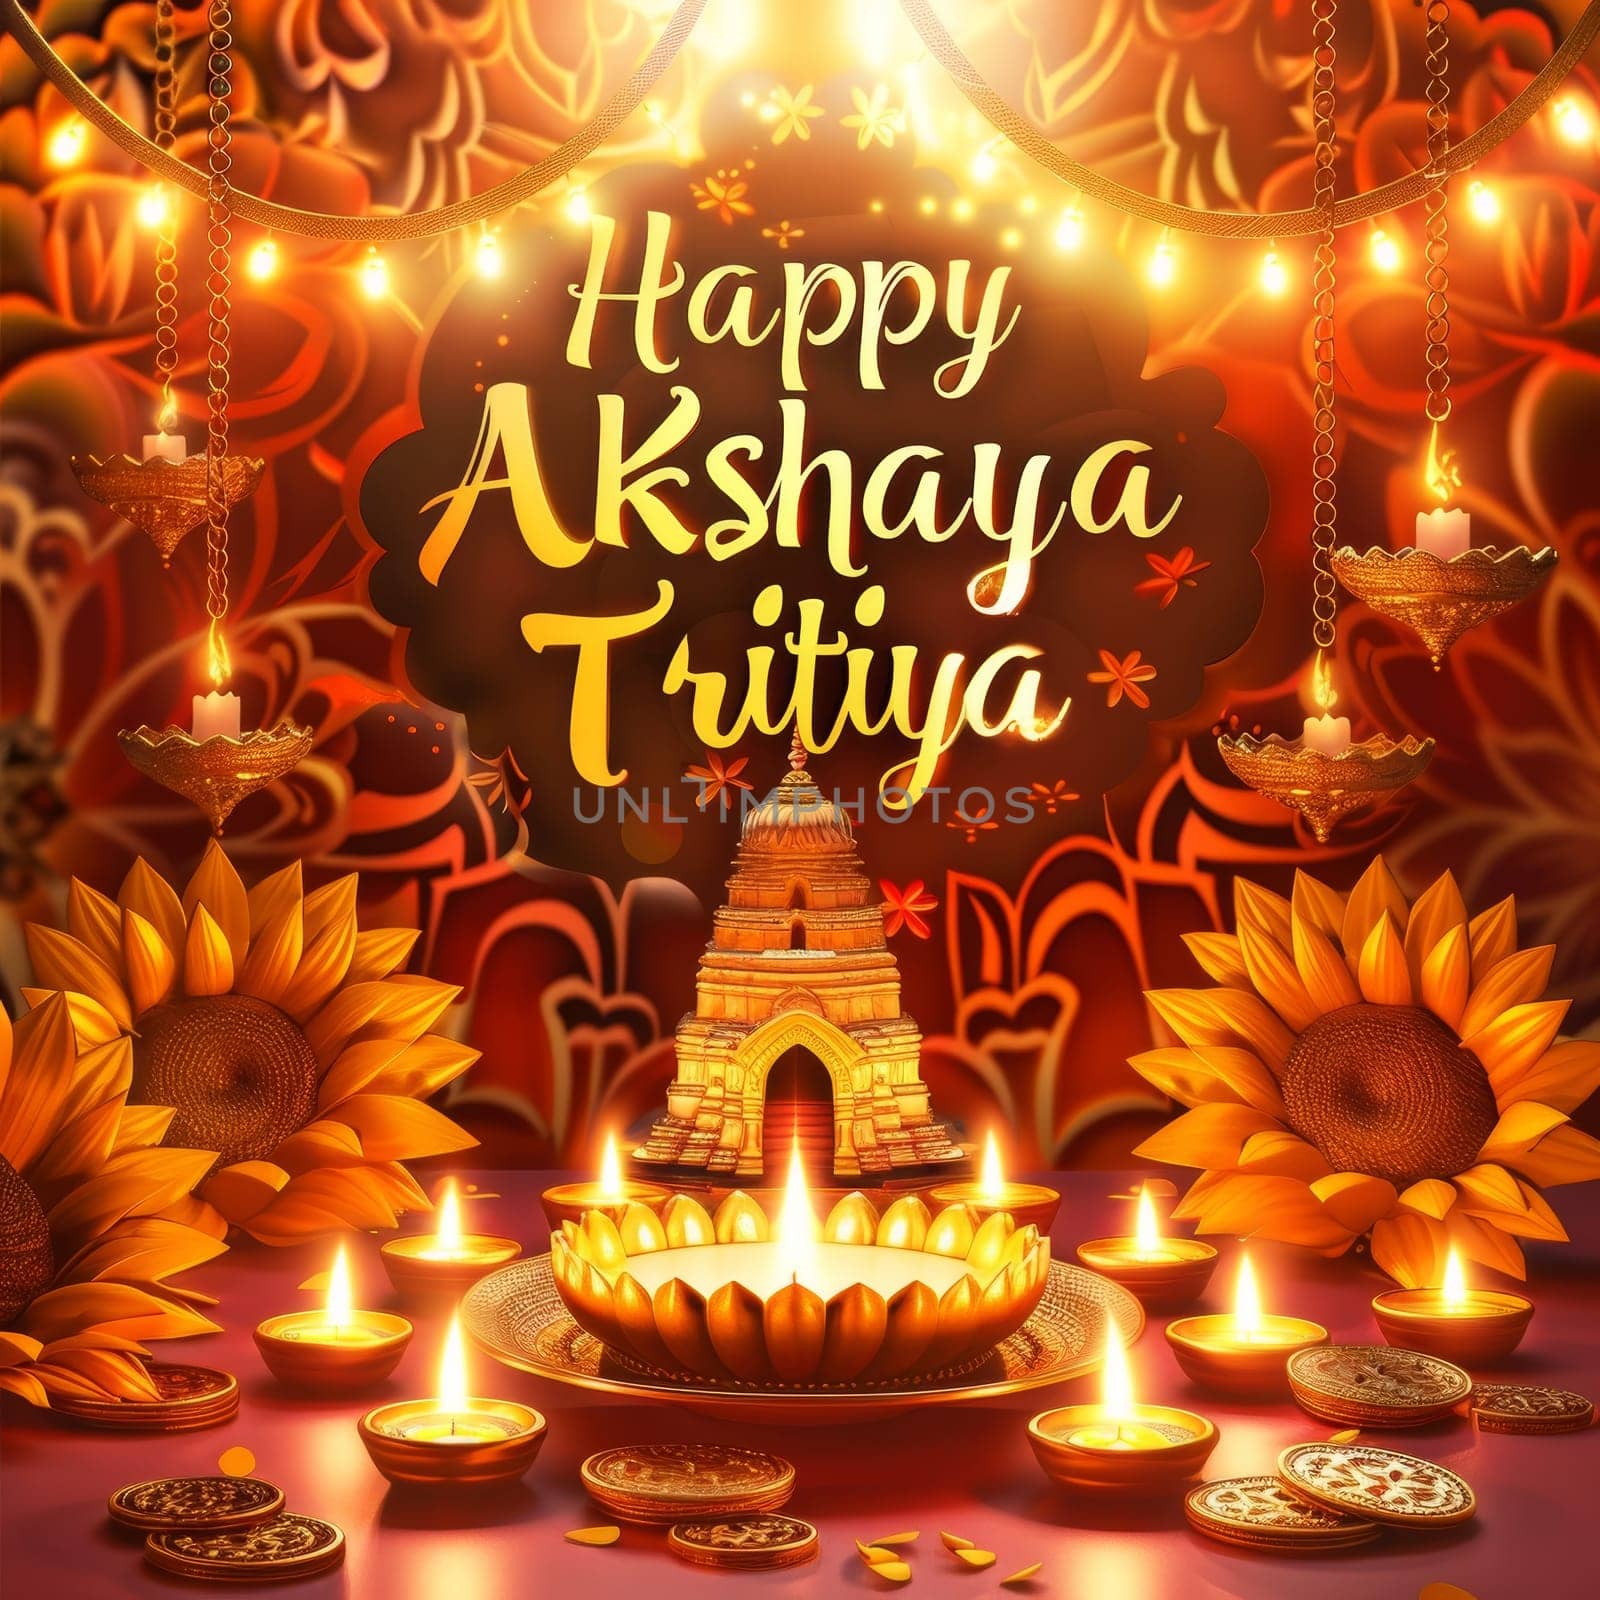 A celebratory illustration for Akshaya Tritiya, displaying a gold palace, lanterns, and sunflowers on a vibrant backdrop.